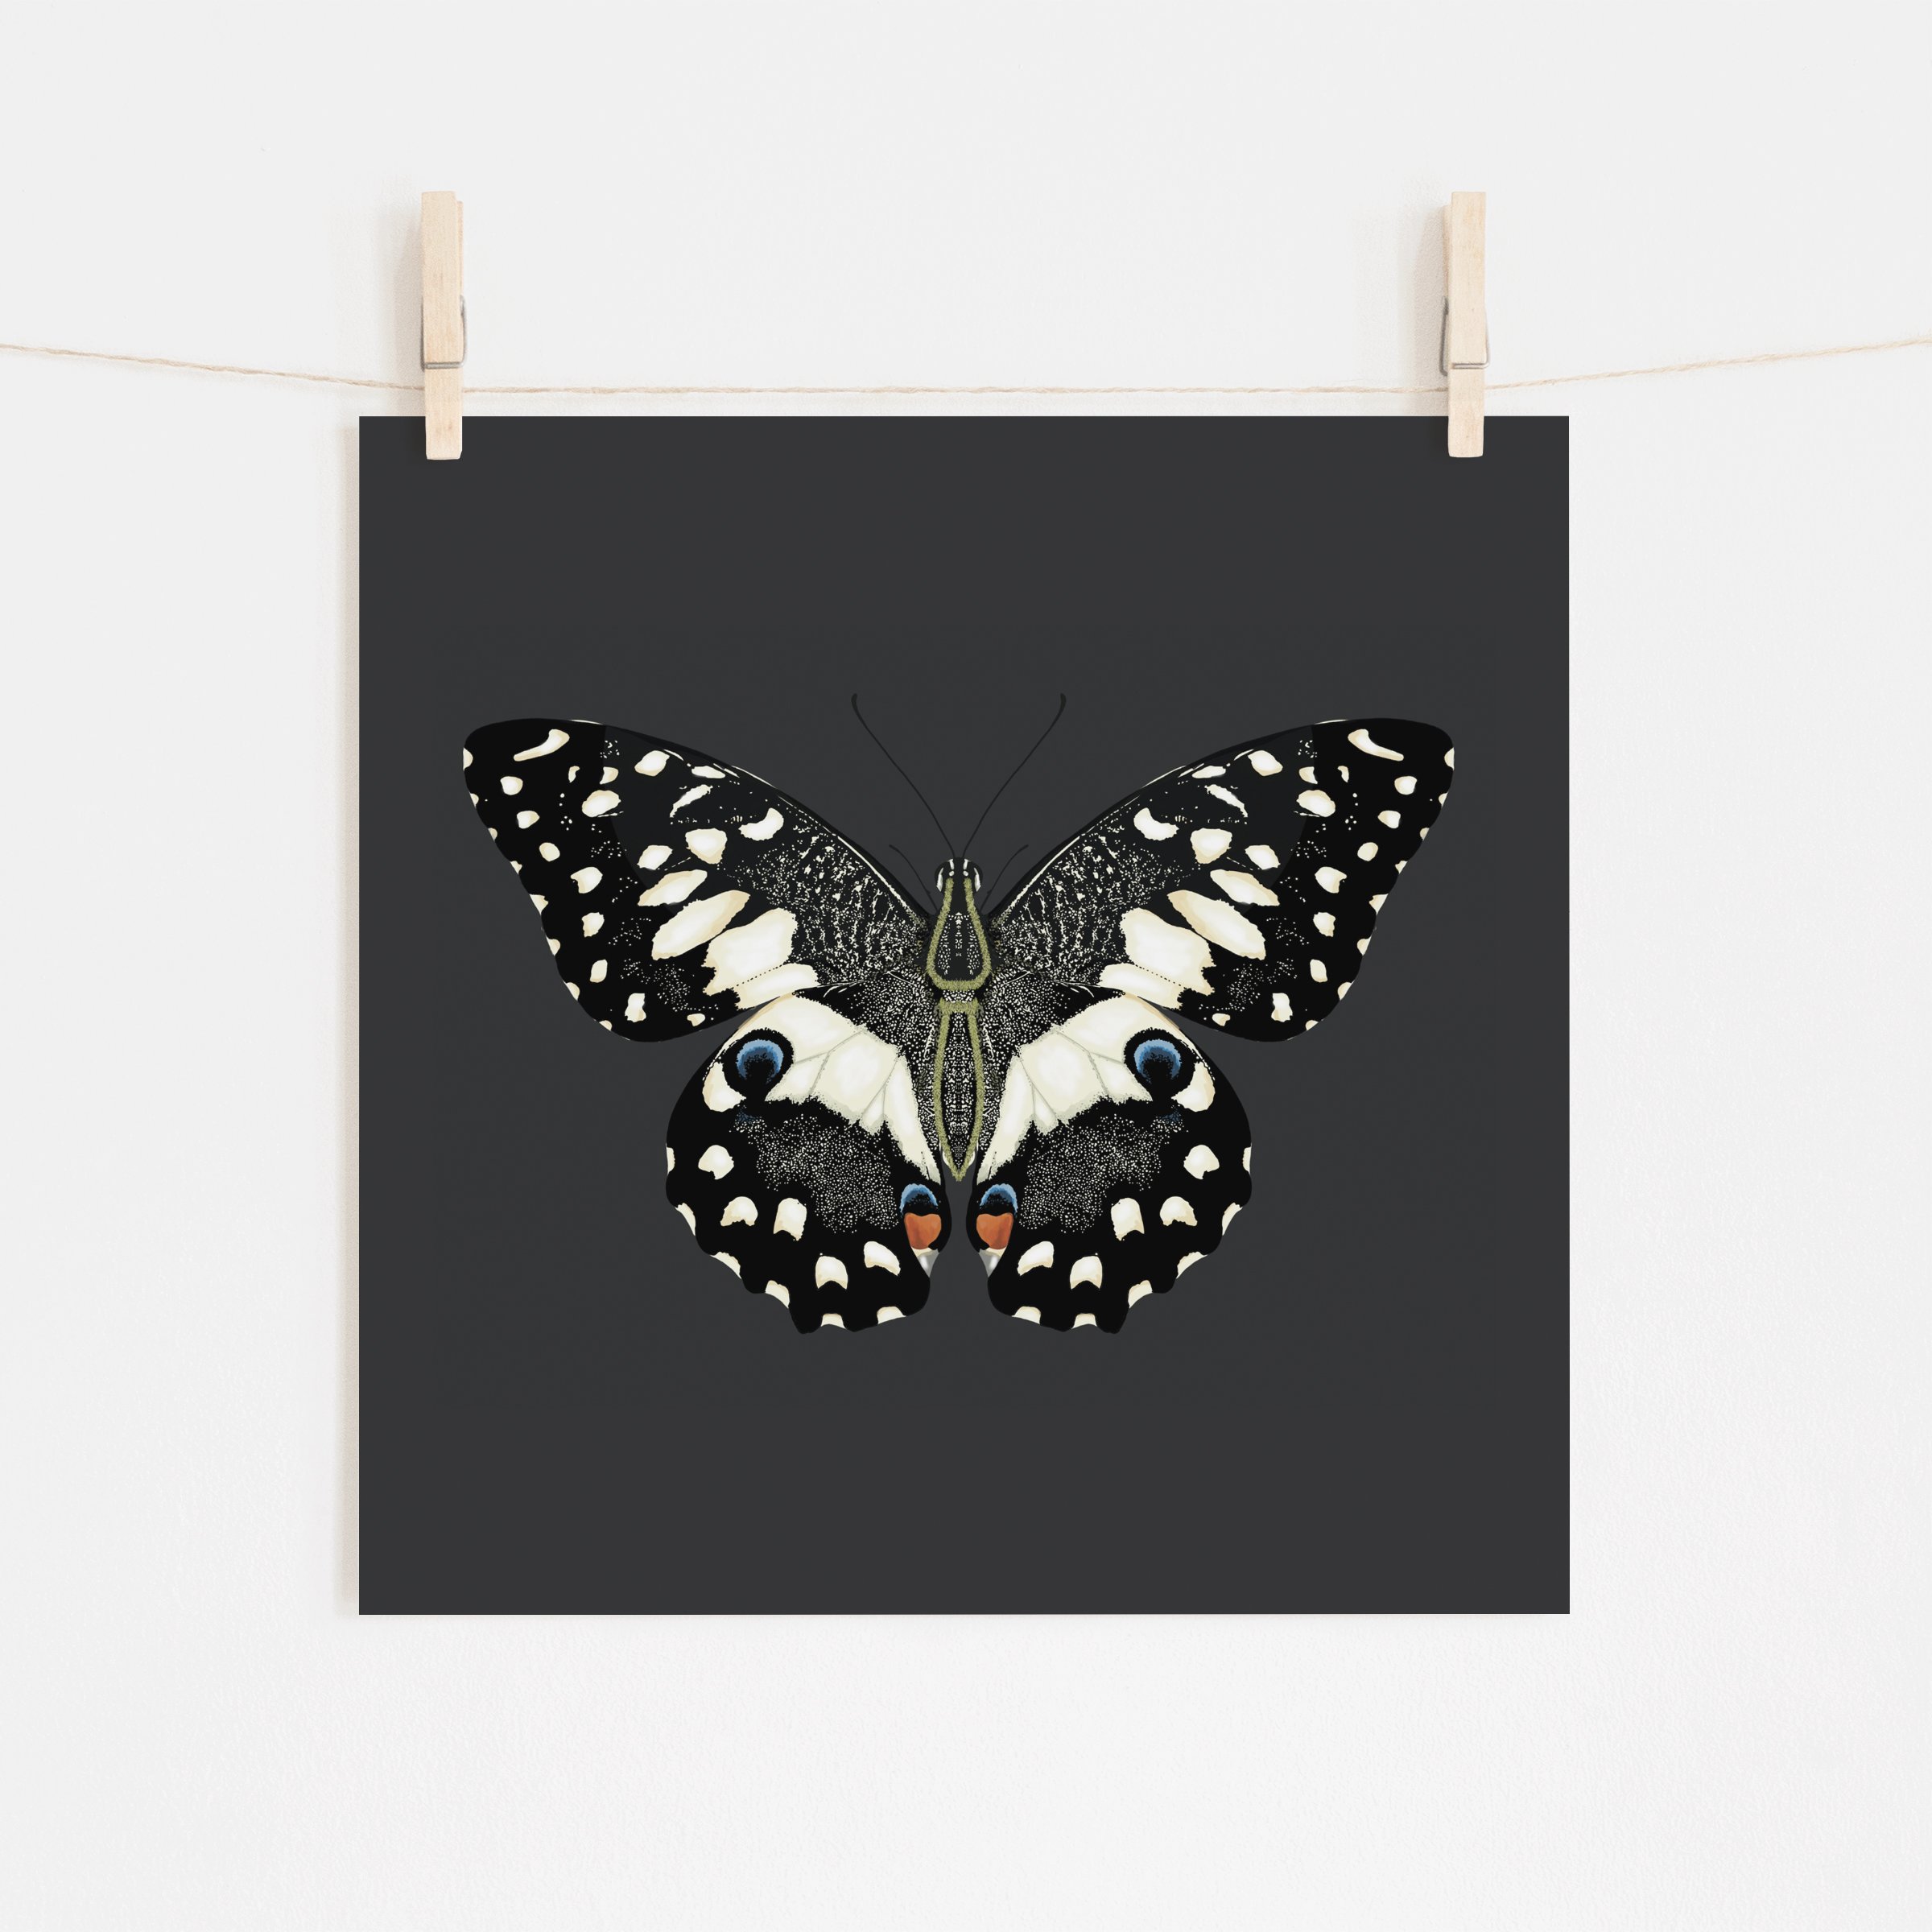 Butterfly on Black- Fine Art Giclee Print (Copy)